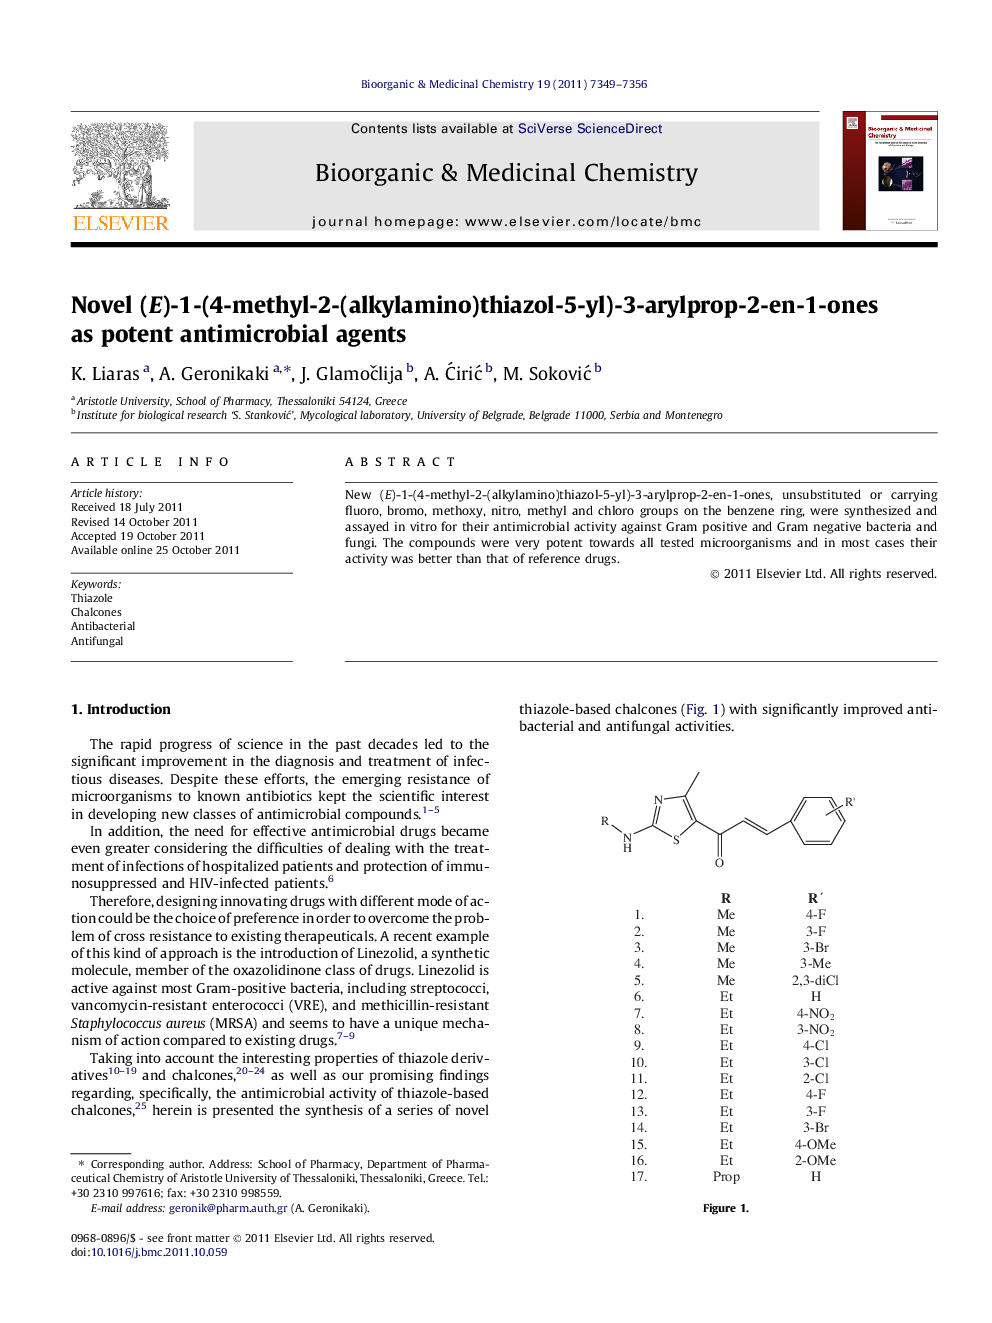 Novel (E)-1-(4-methyl-2-(alkylamino)thiazol-5-yl)-3-arylprop-2-en-1-ones as potent antimicrobial agents